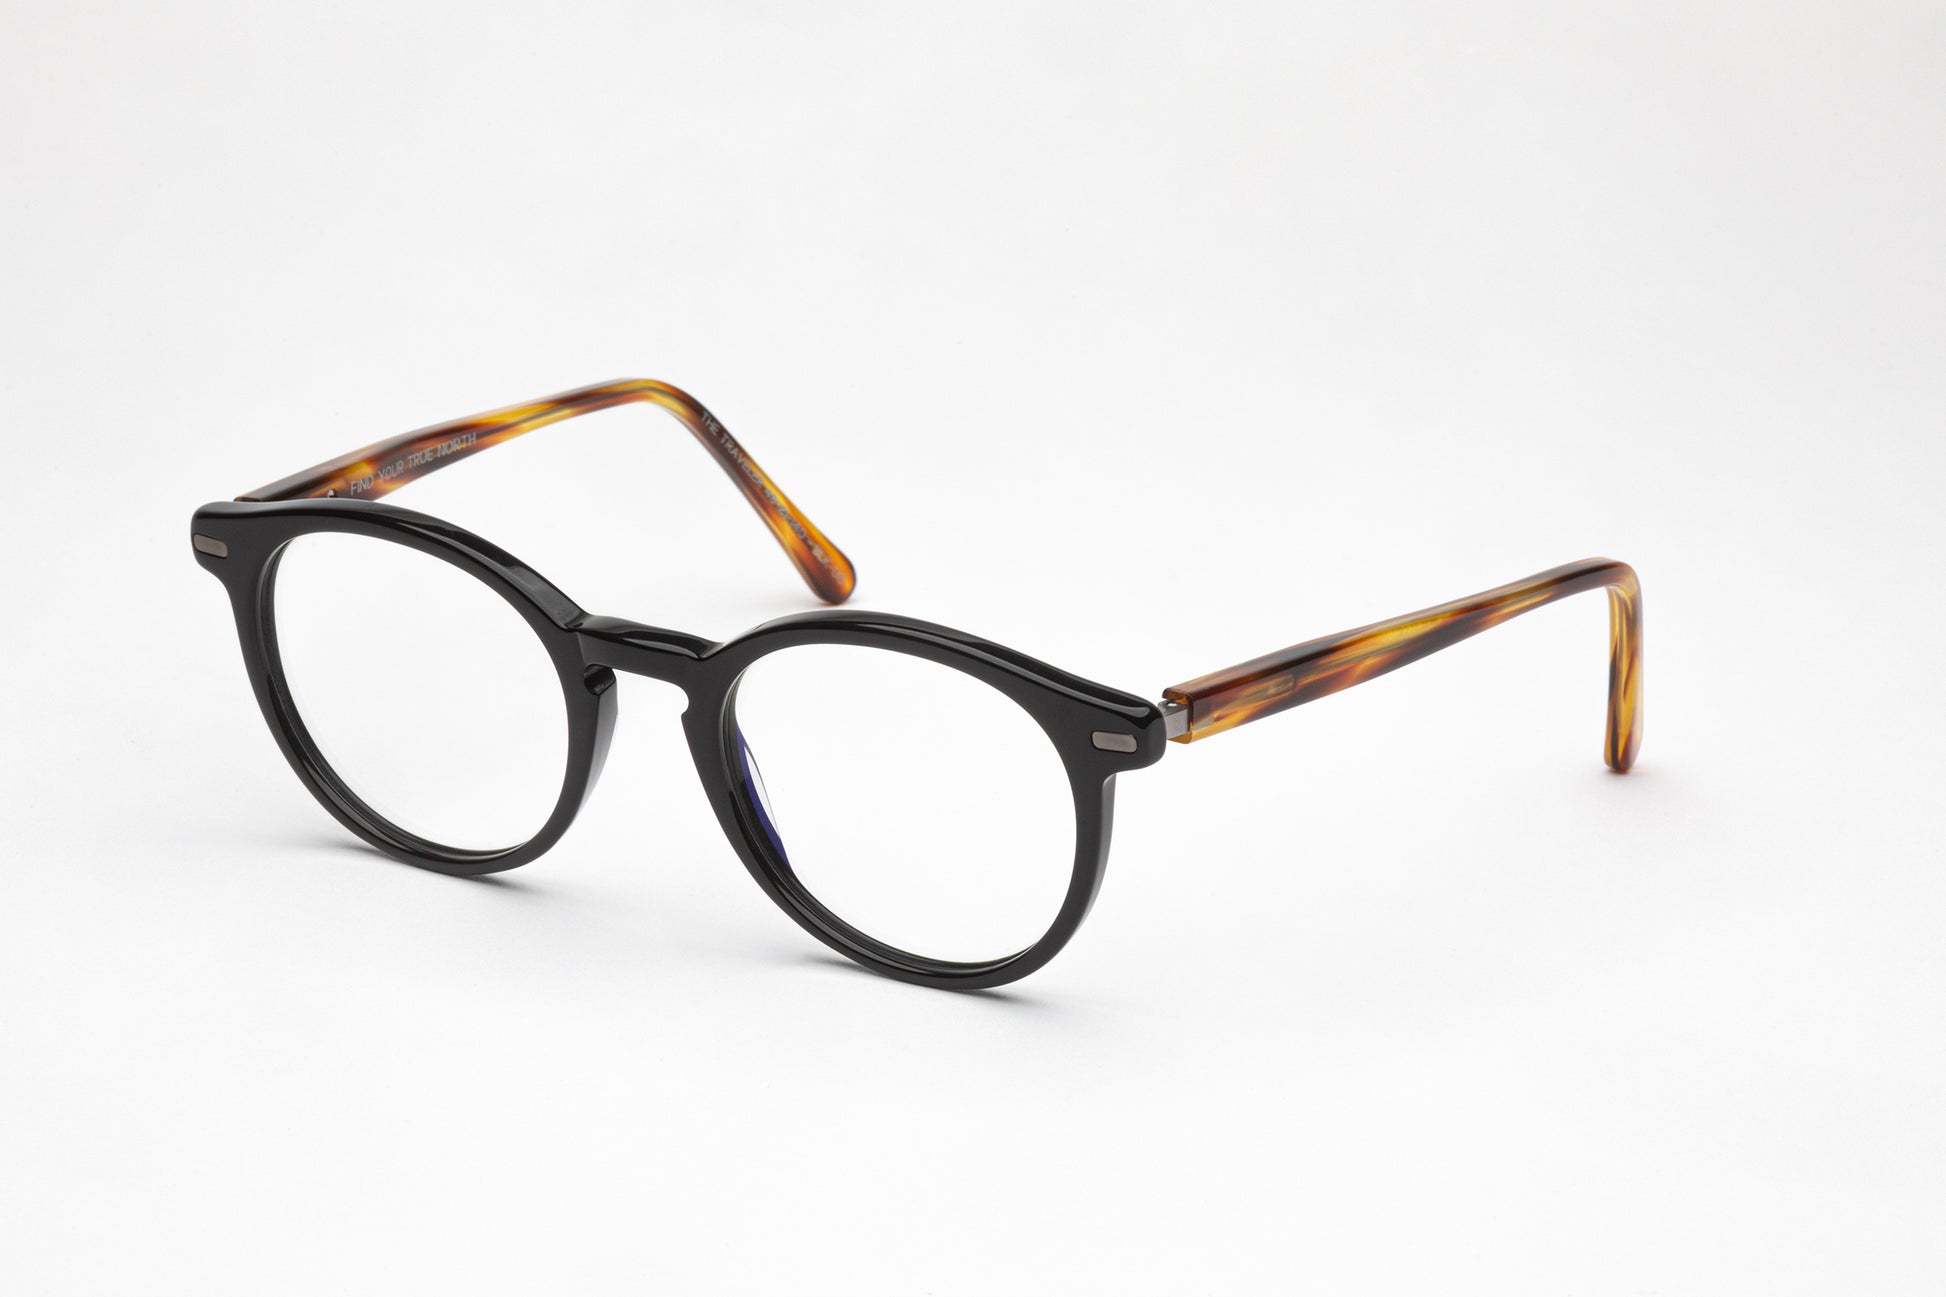 Angled View - The Traveler | Black Acetate Frame with Tortoiseshell stems – Low Nose Bridge Glasses 